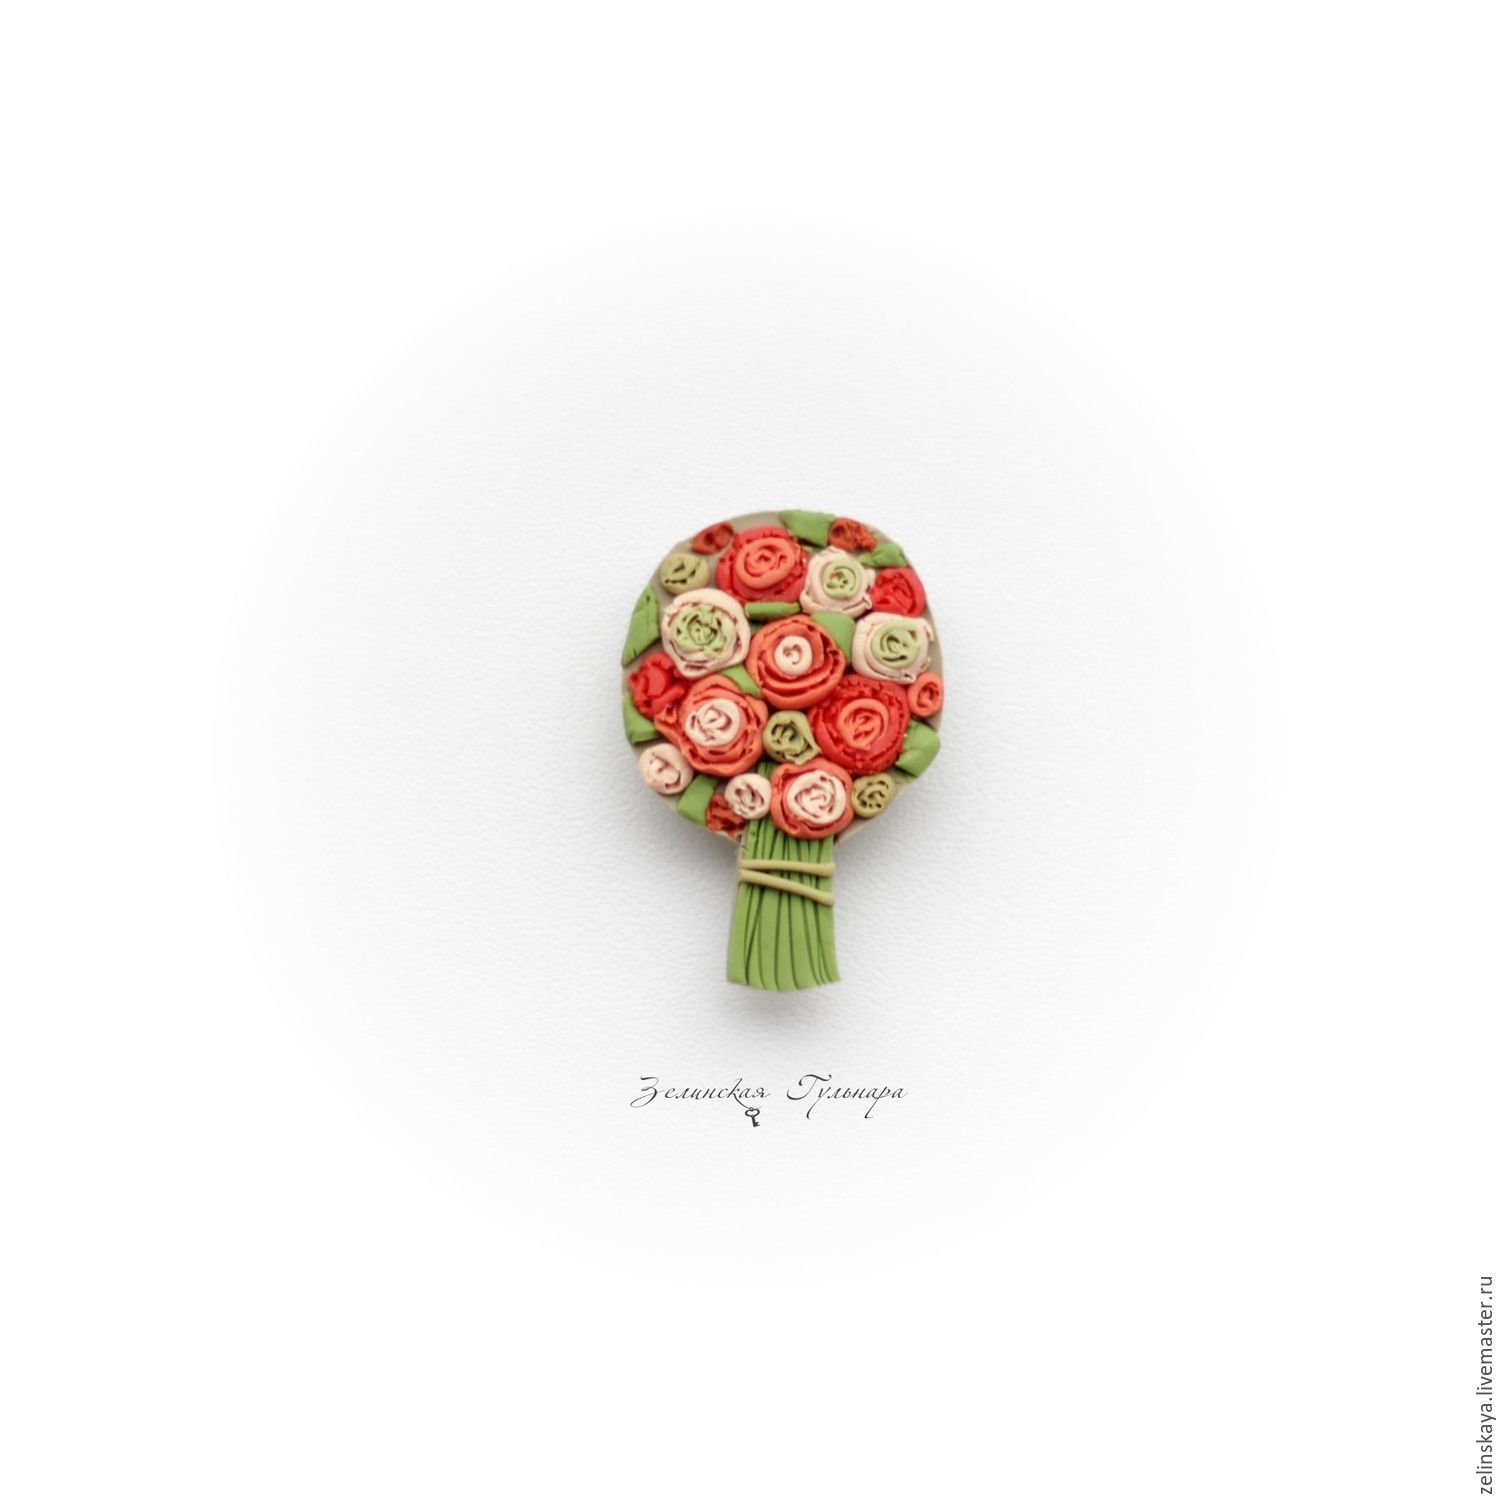 Polymer clay miniature bouquet brooch